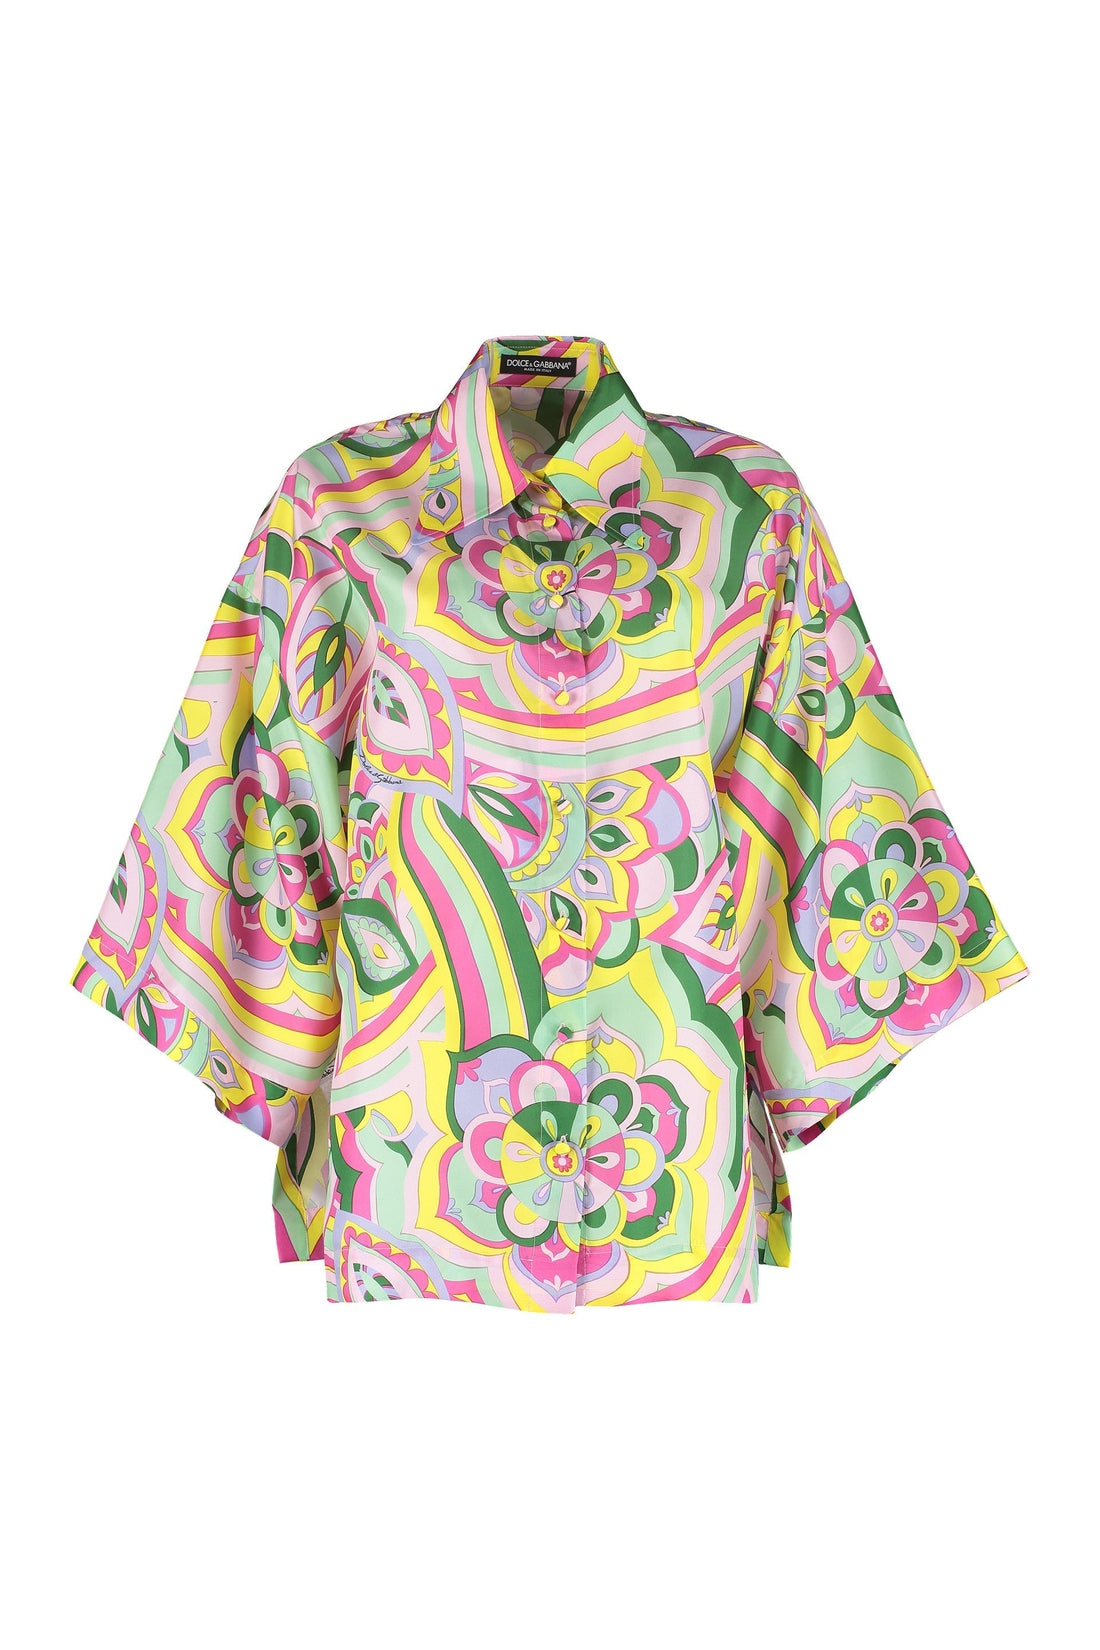 Dolce & Gabbana-OUTLET-SALE-Printed silk shirt-ARCHIVIST